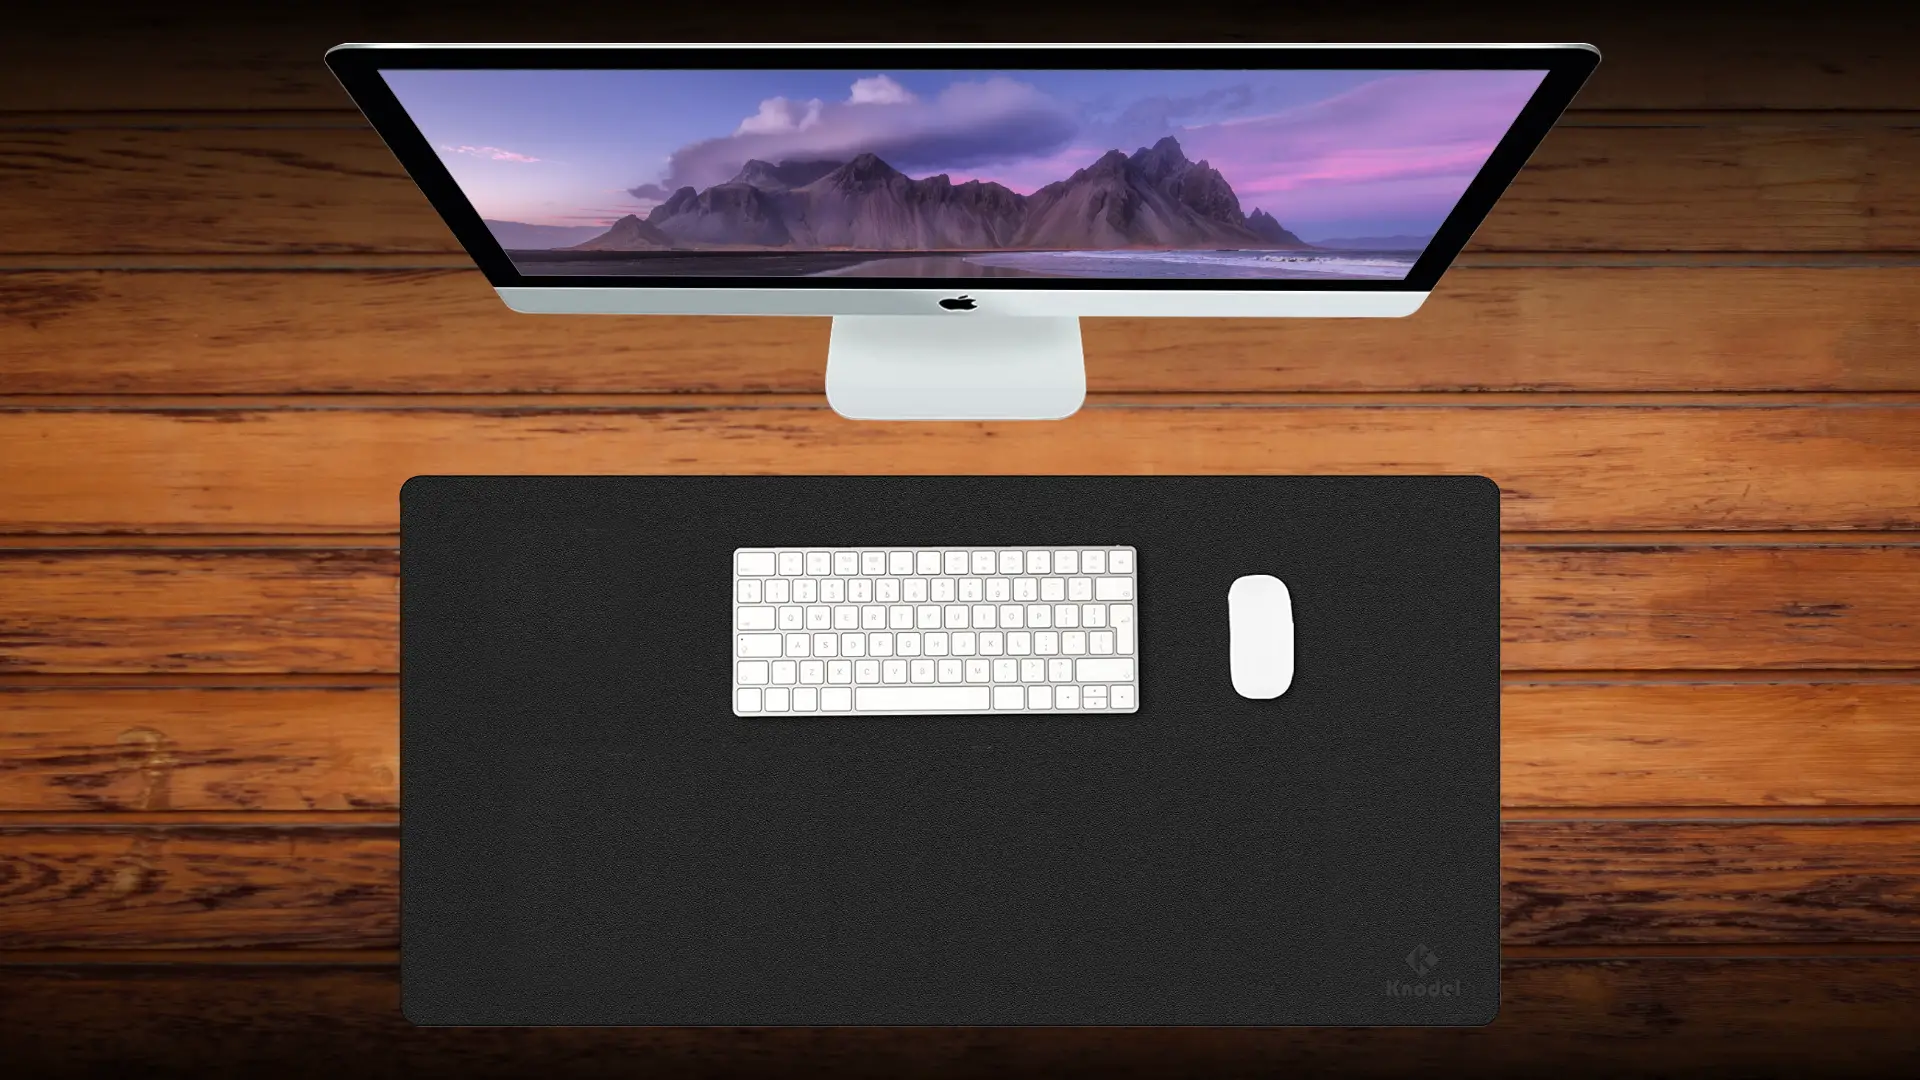 KNODEL Desk Pad Review - A Full Desk Mat-1